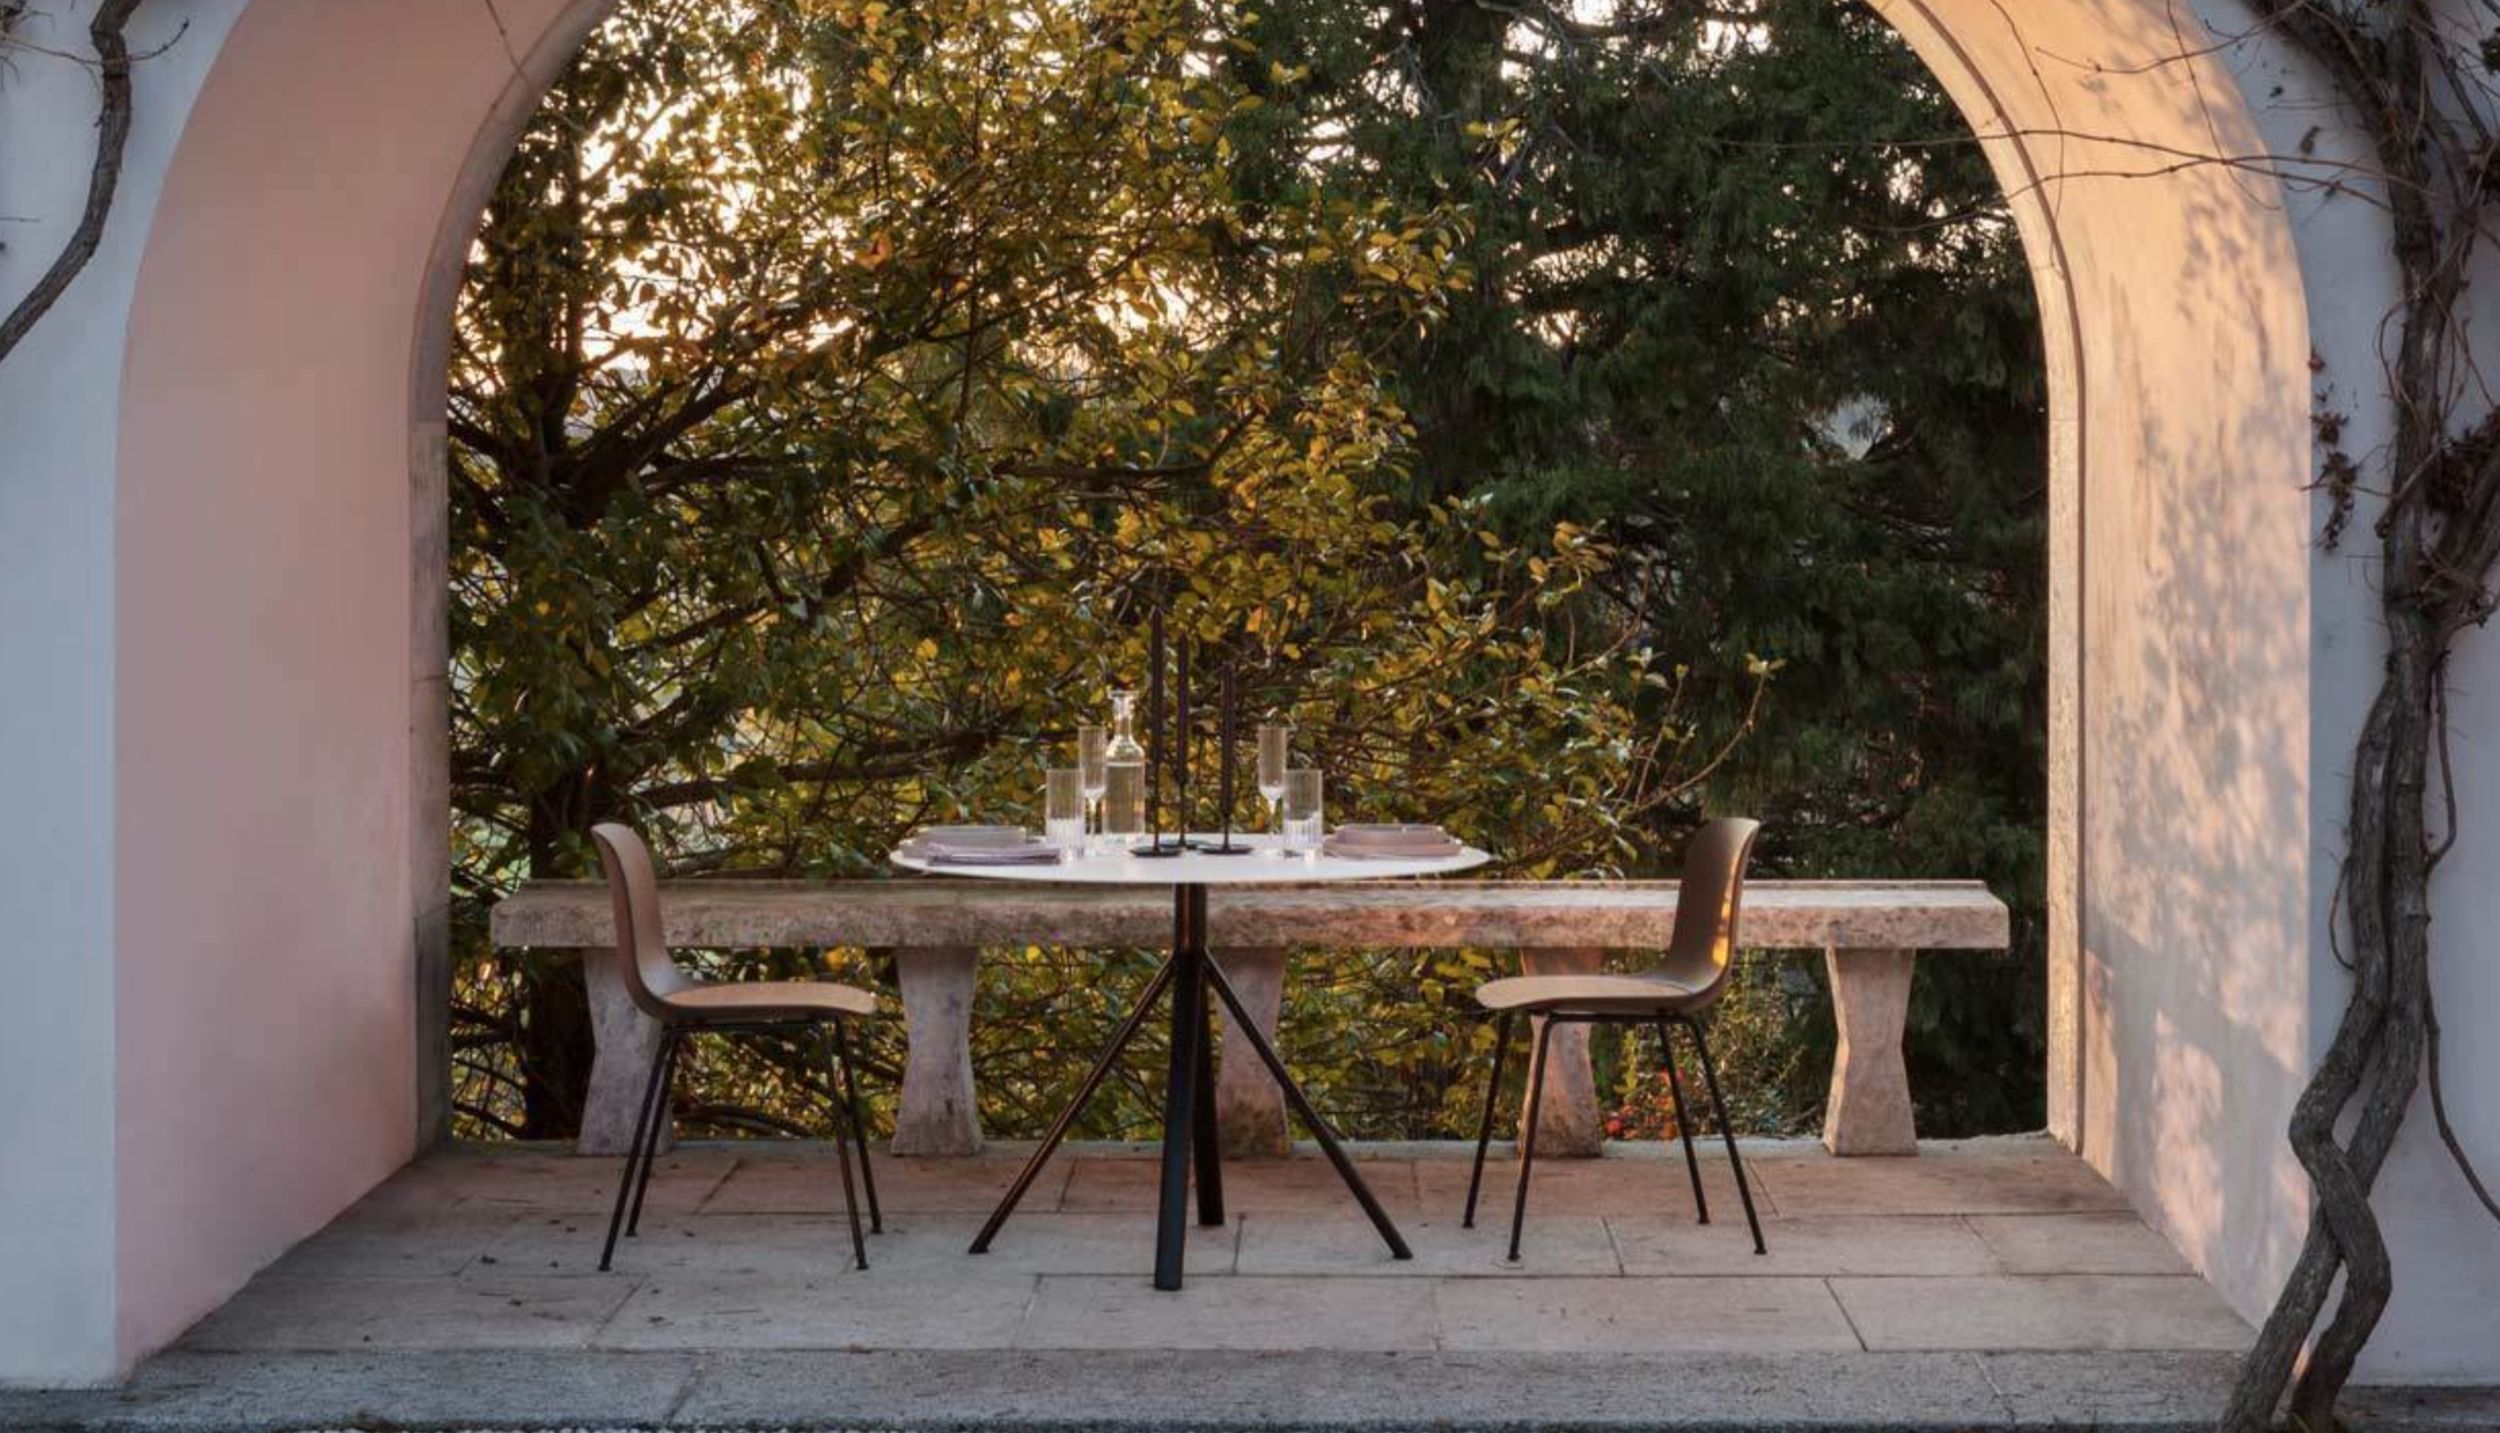 Onzeker druiven strategie Ronde tuintafels — Loncin Interieur | A Beautiful Home